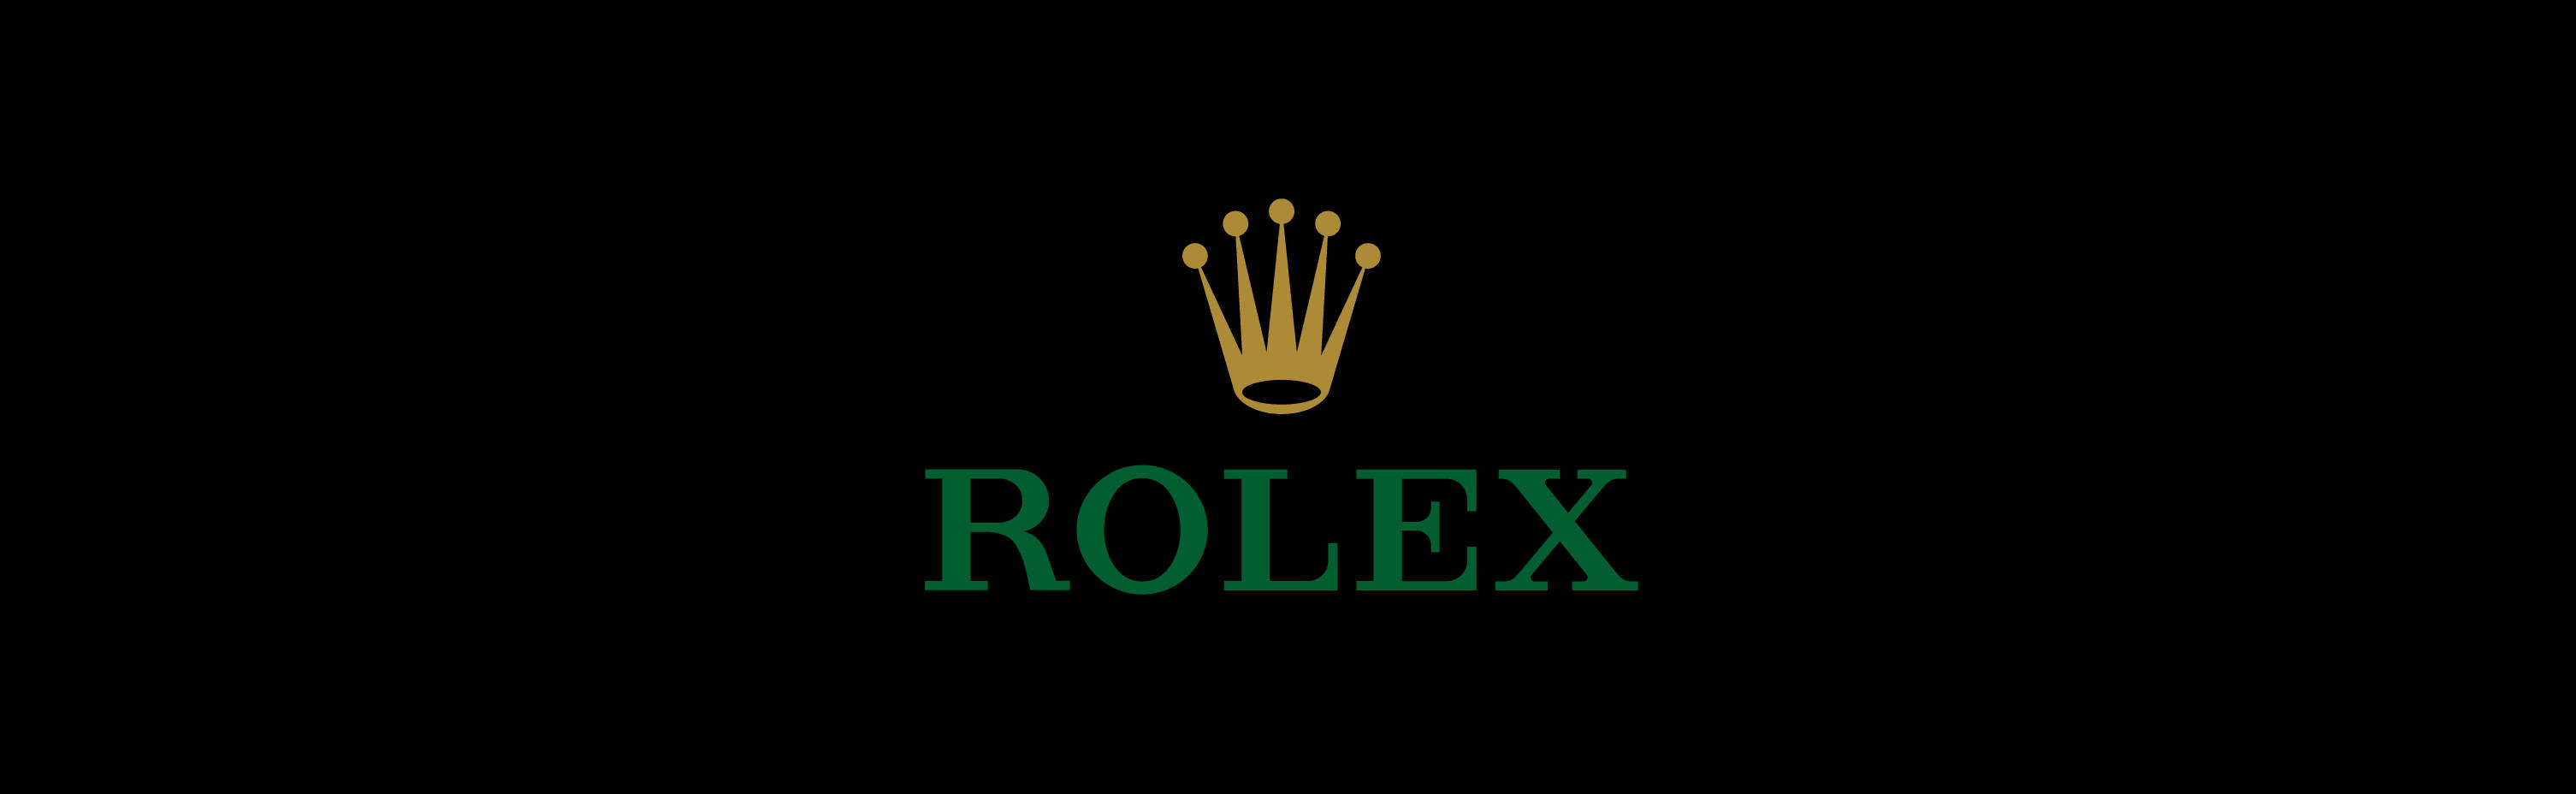 Iconic Green Rolex Logo Background